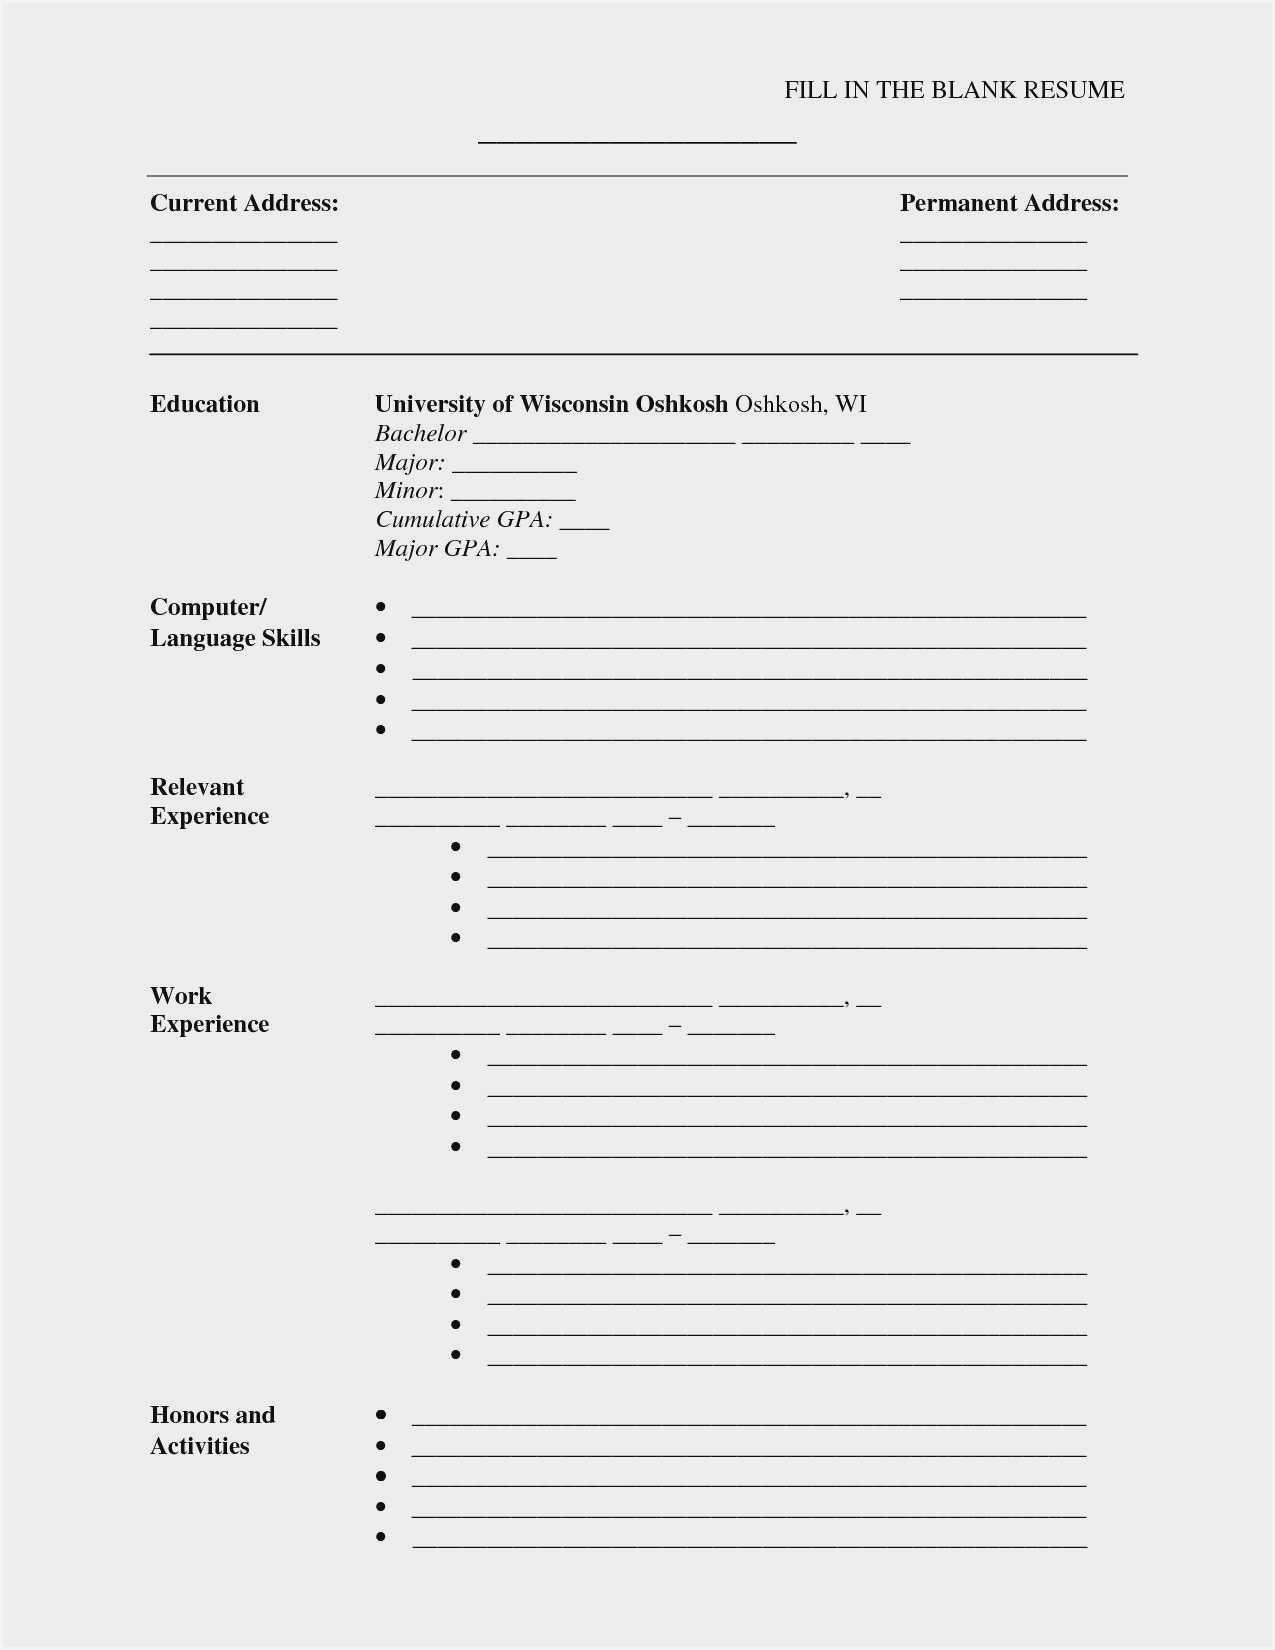 Blank Cv Format Word Download – Resume : Resume Sample #3945 Intended For Free Blank Cv Template Download